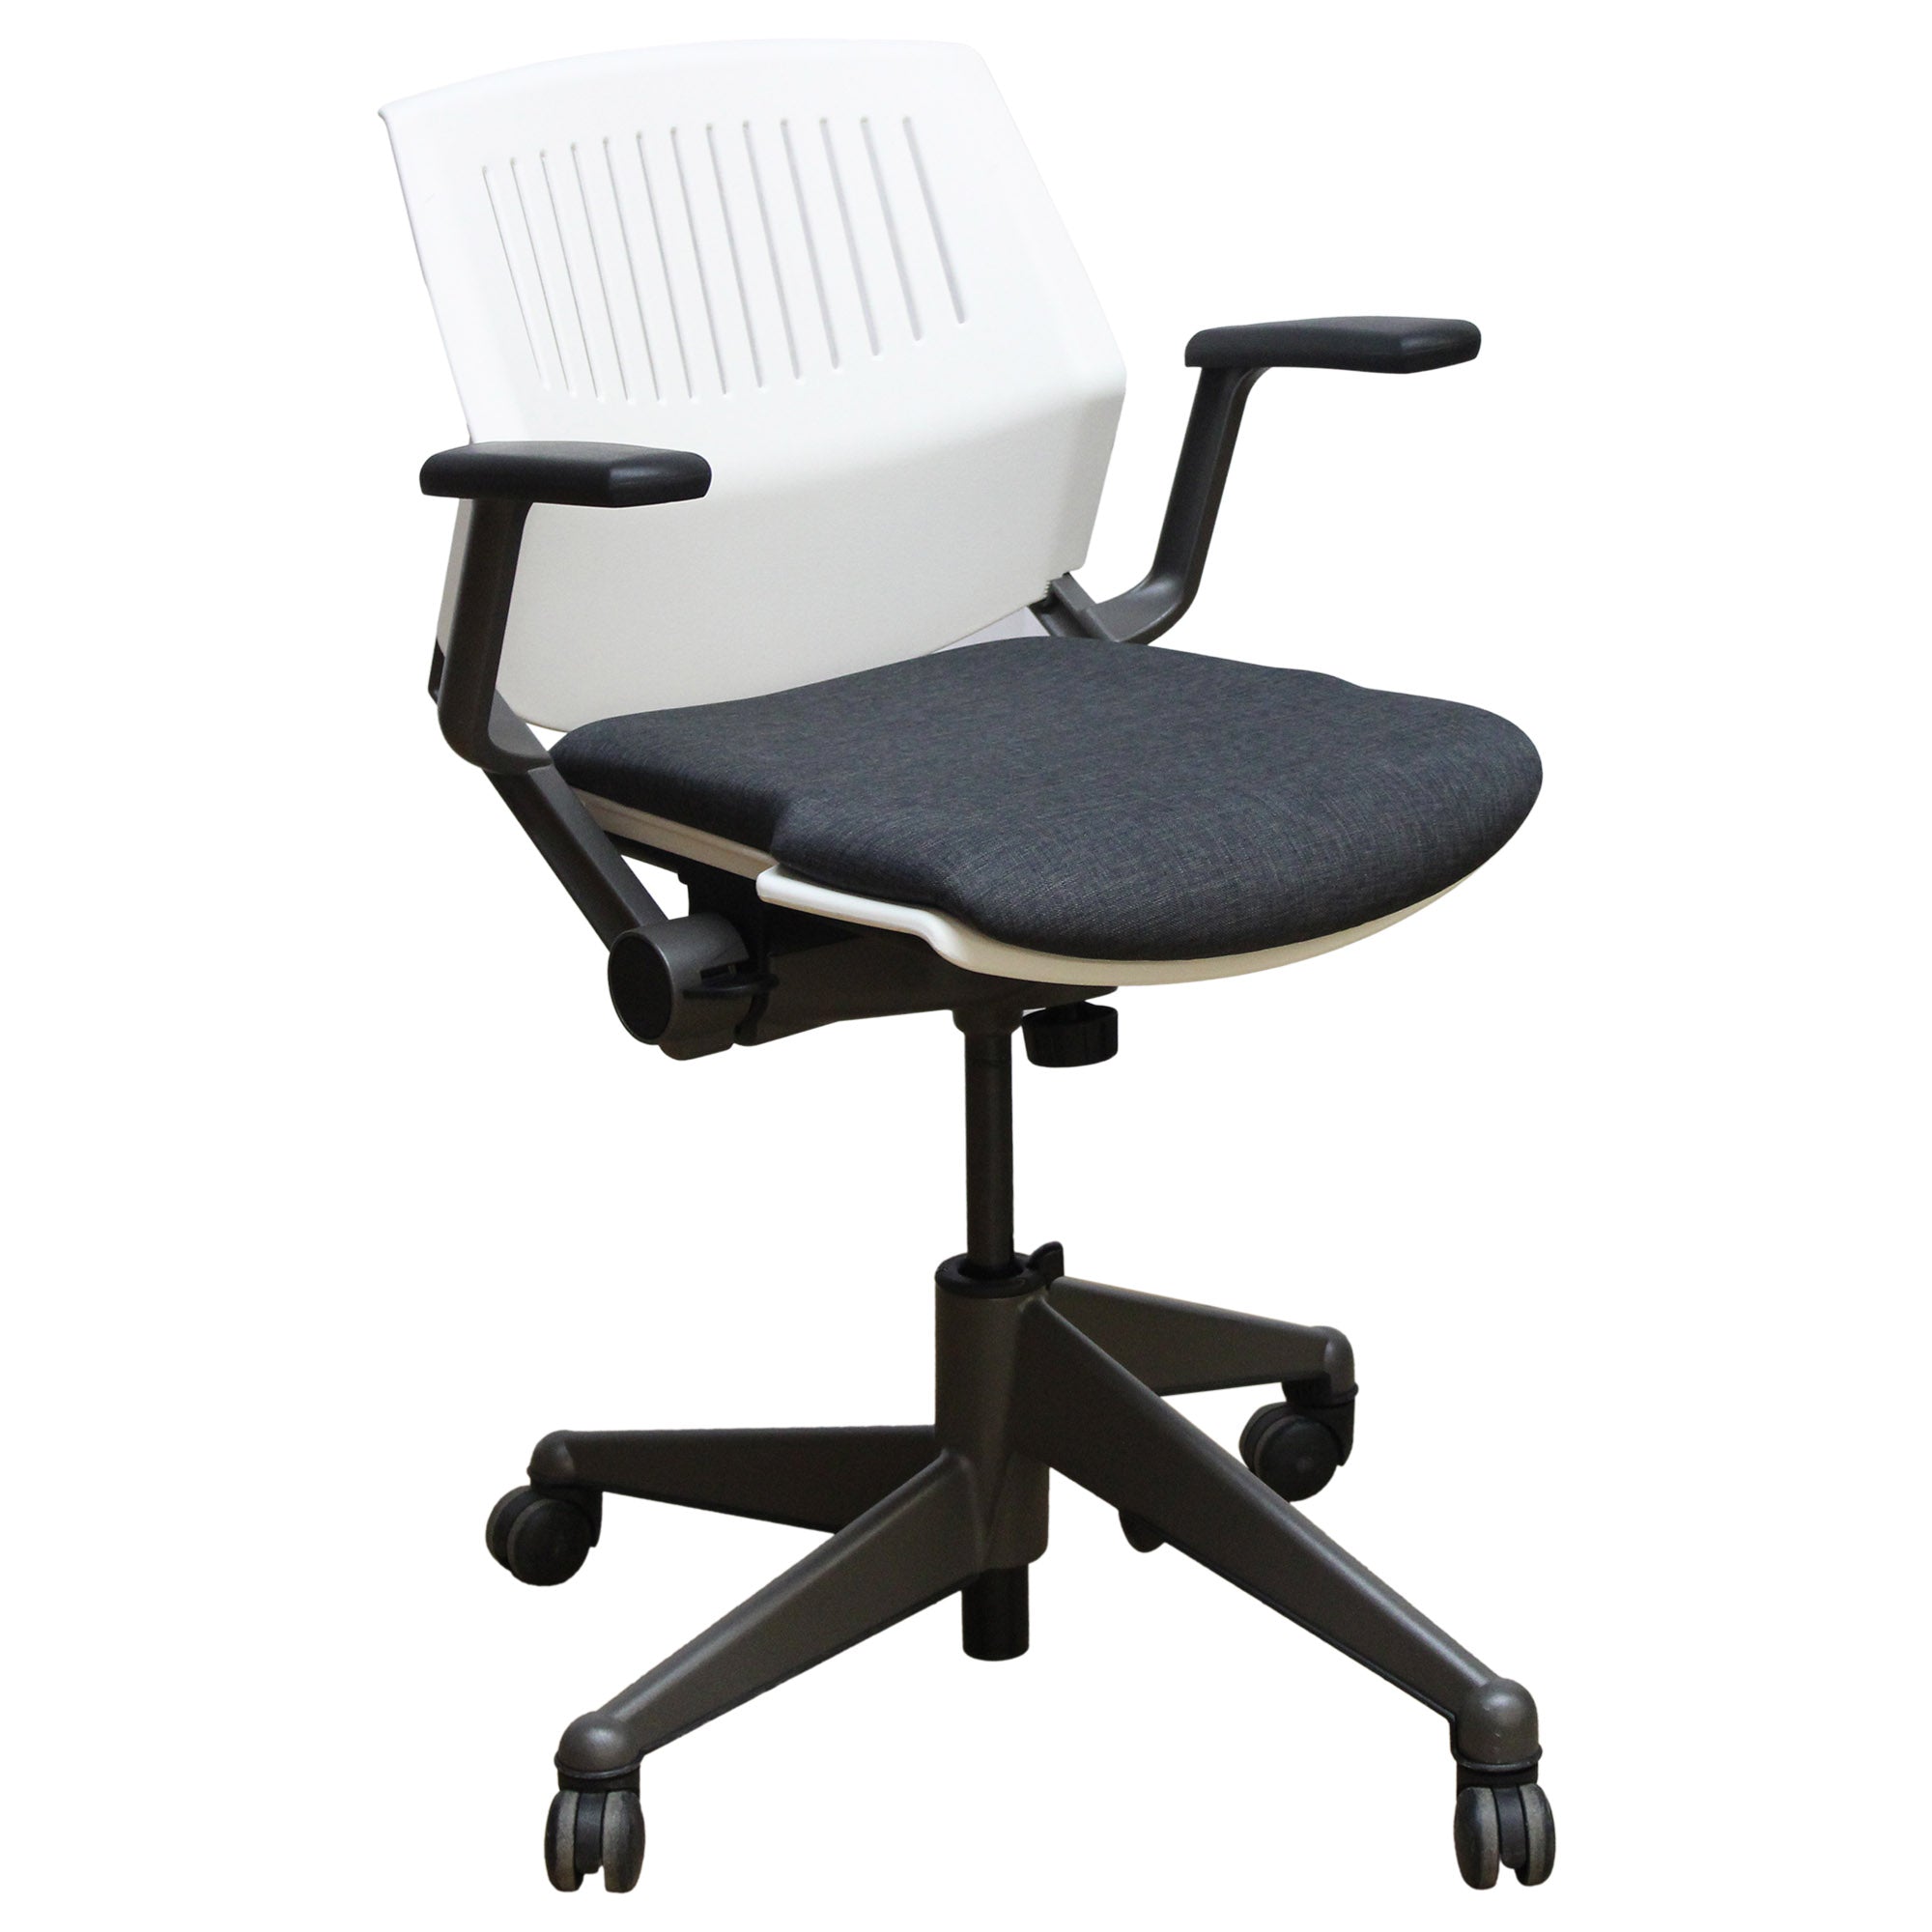 Steelcase Vecta Kart Task Chair - Graphite Base - Preowned